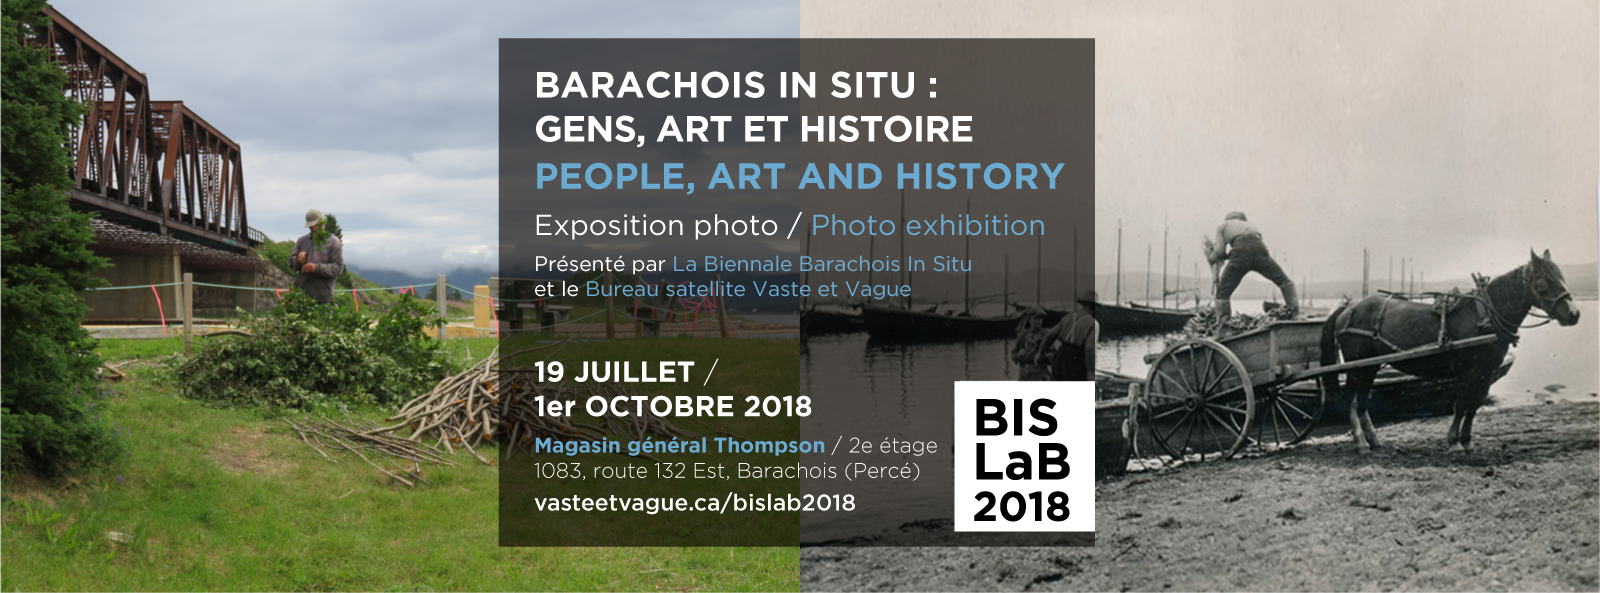 EXPO PHOTO | BARACHOIS IN SITU : GENS, ART ET HISTOIRE